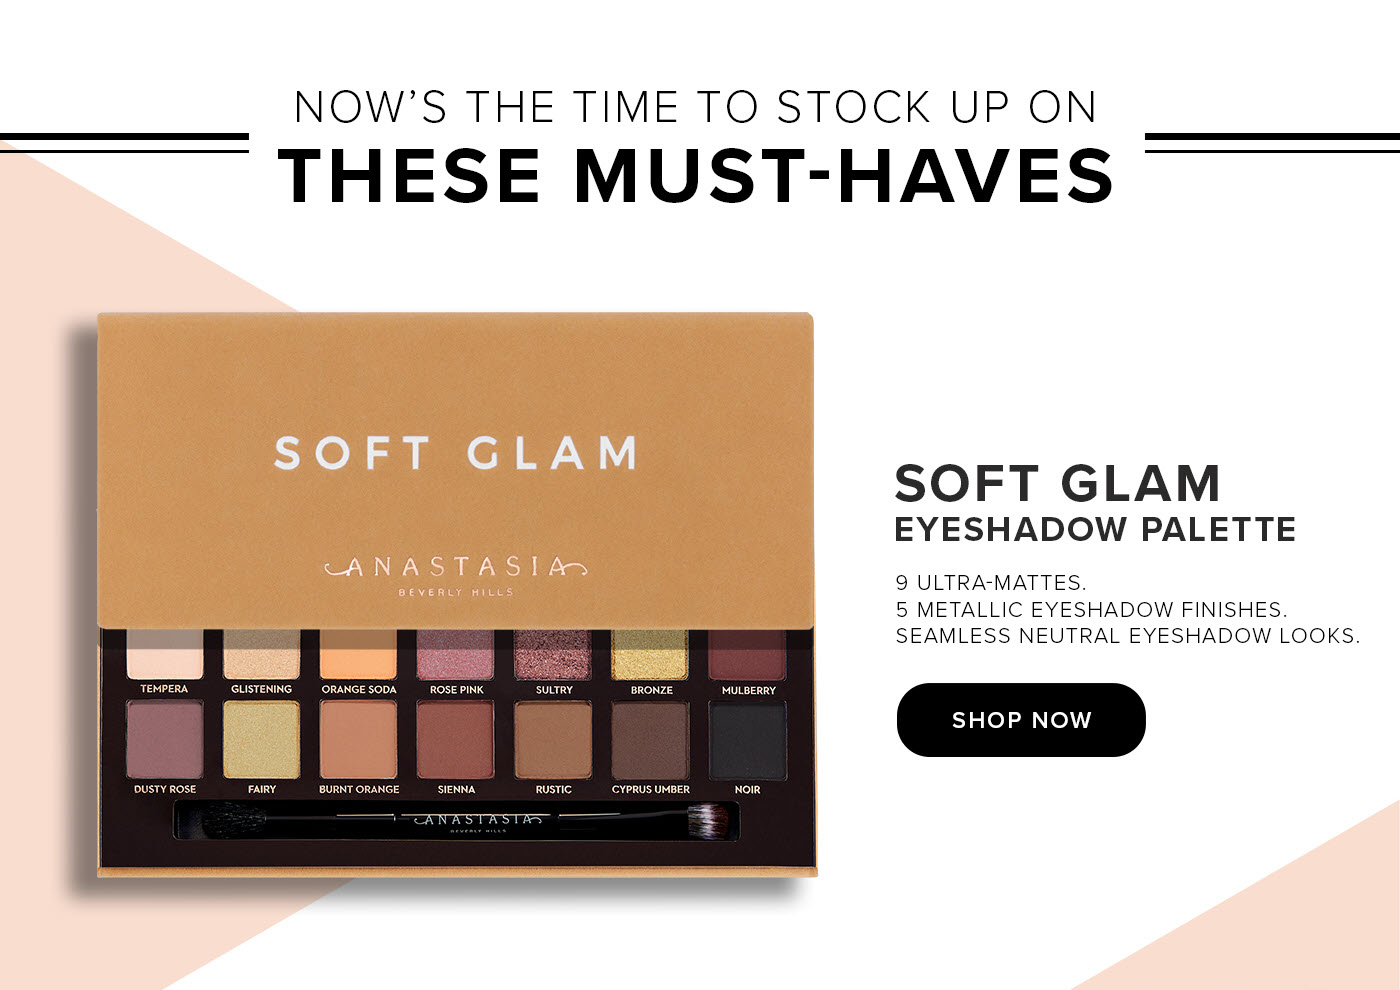 Soft Glam Eyeshadow Palette - Shop Now